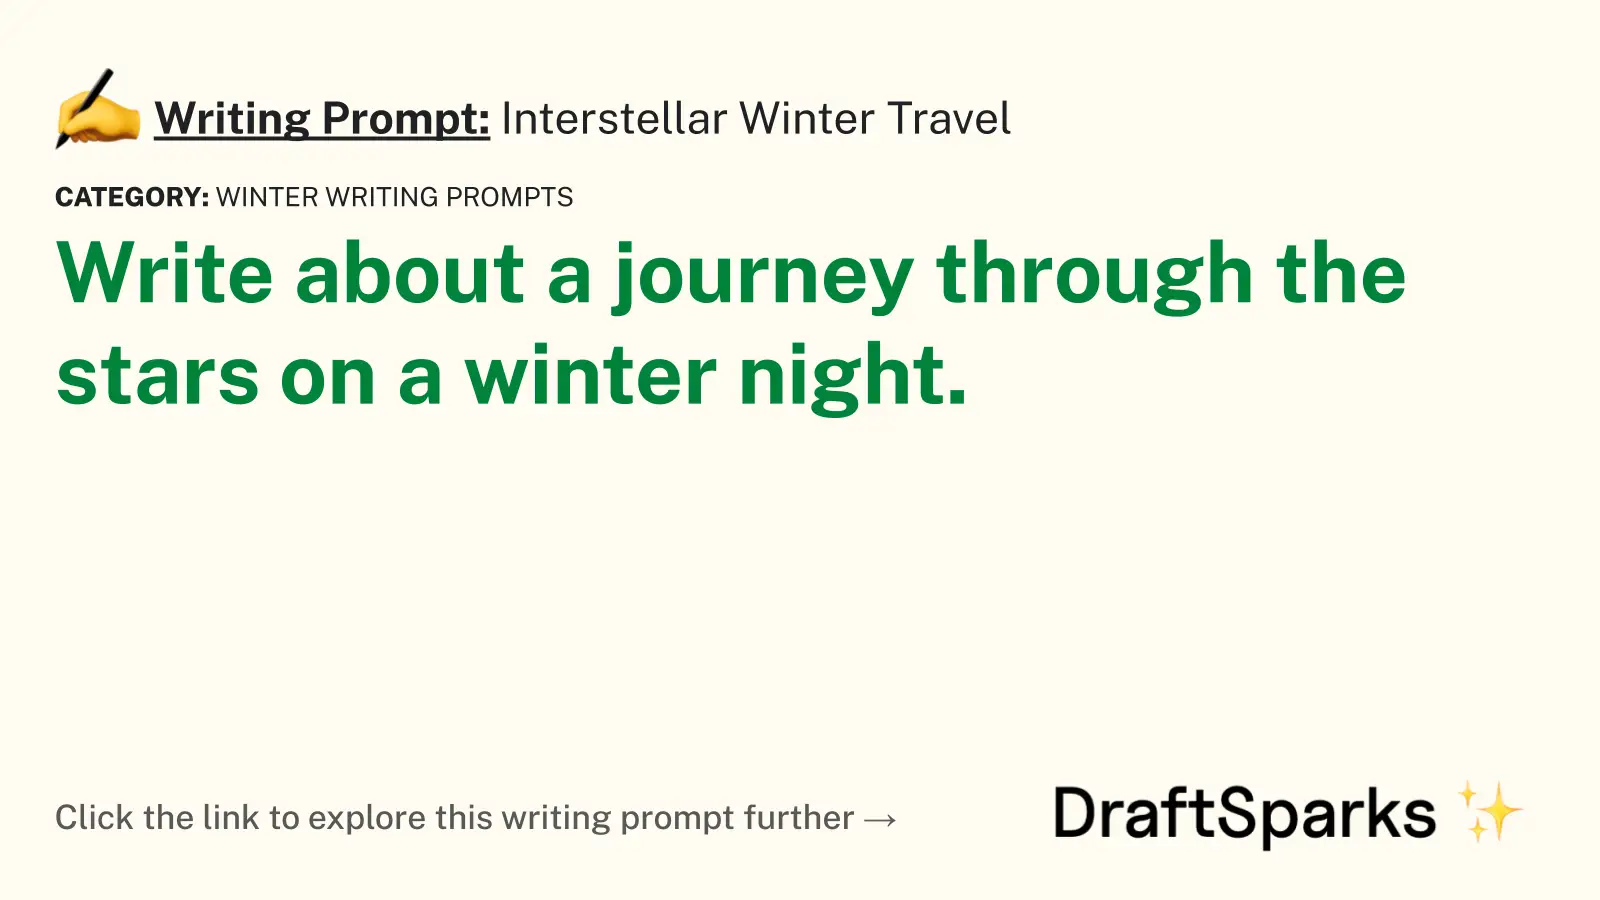 Interstellar Winter Travel